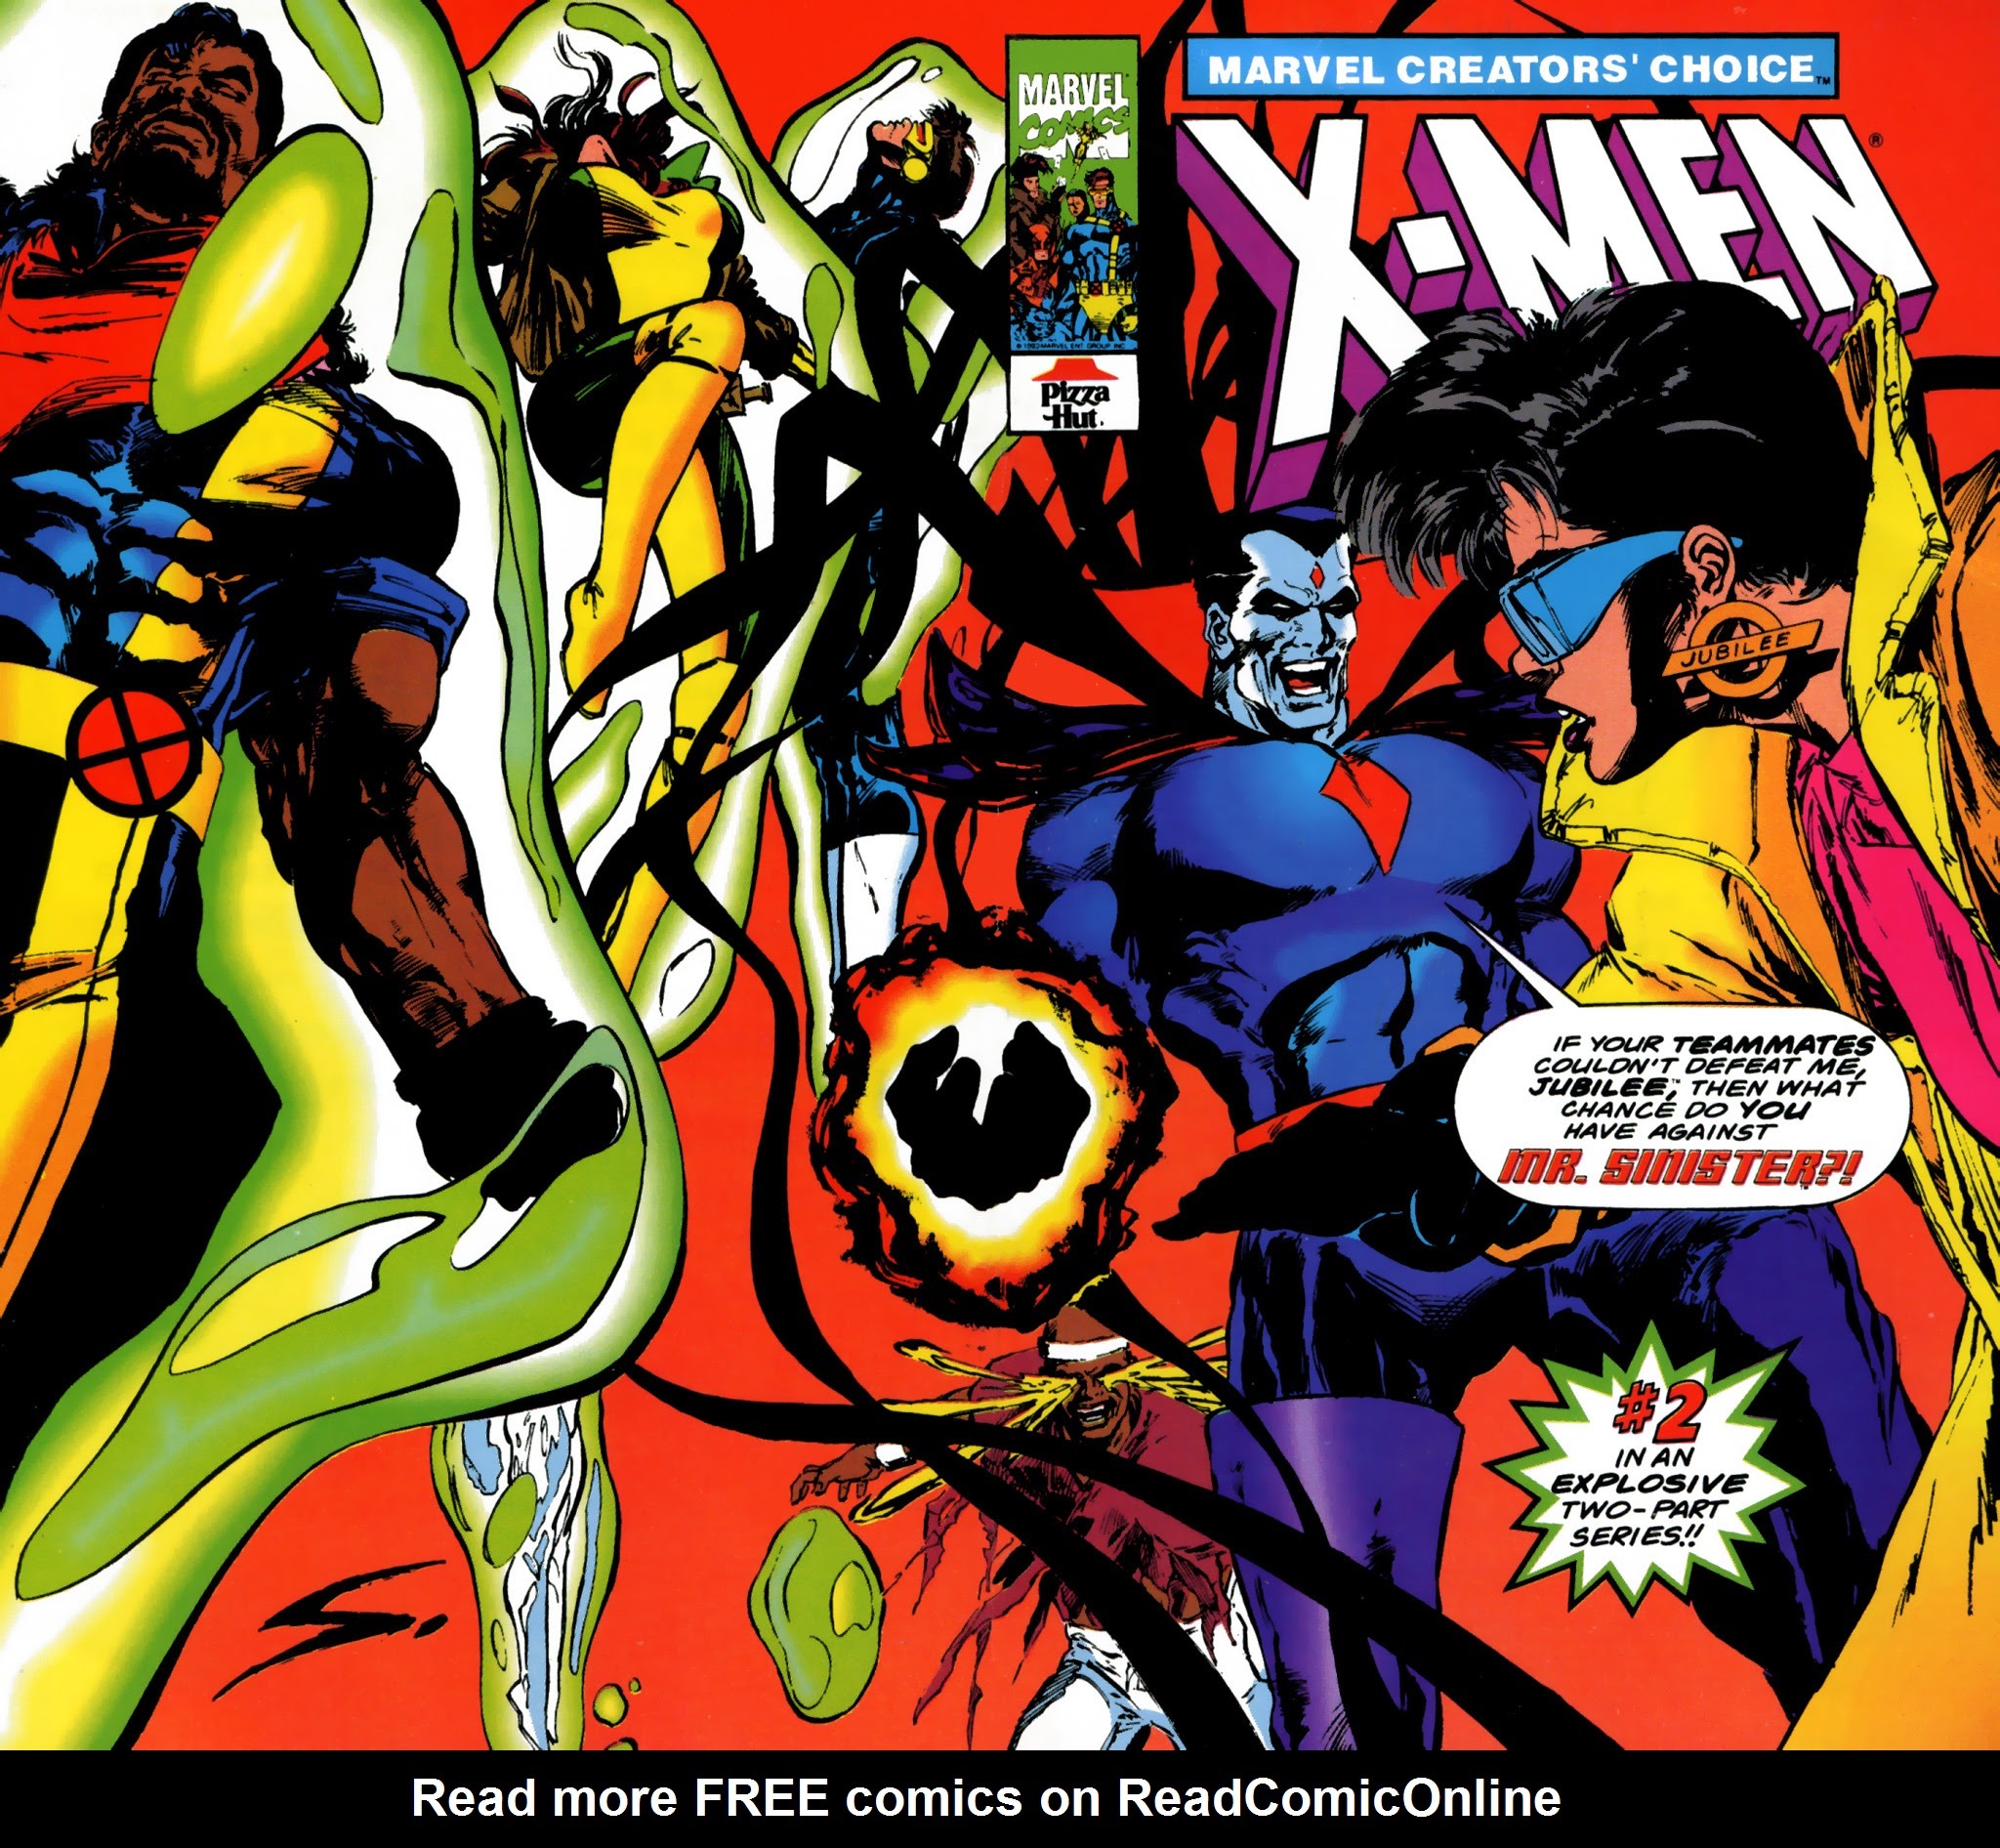 Read online Marvel Creators' Choice X-men comic -  Issue #2 - 1